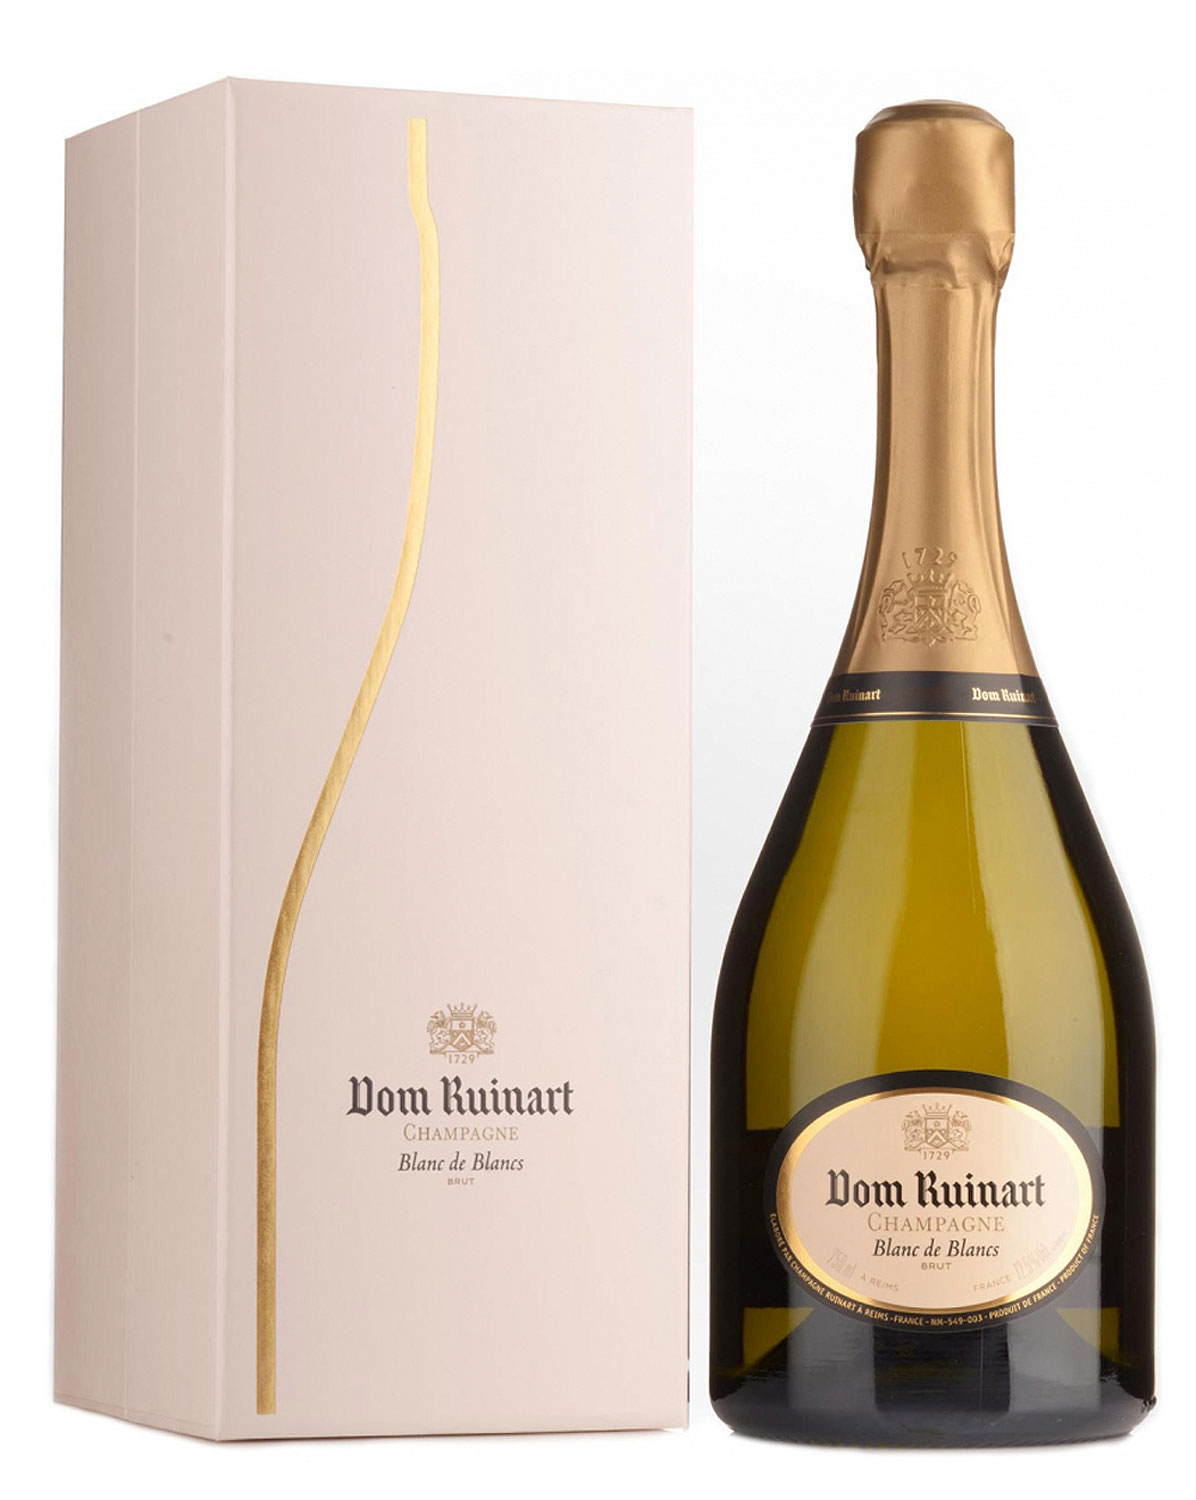 Dom Ruinart Champagne Blanc de Blancs 2009